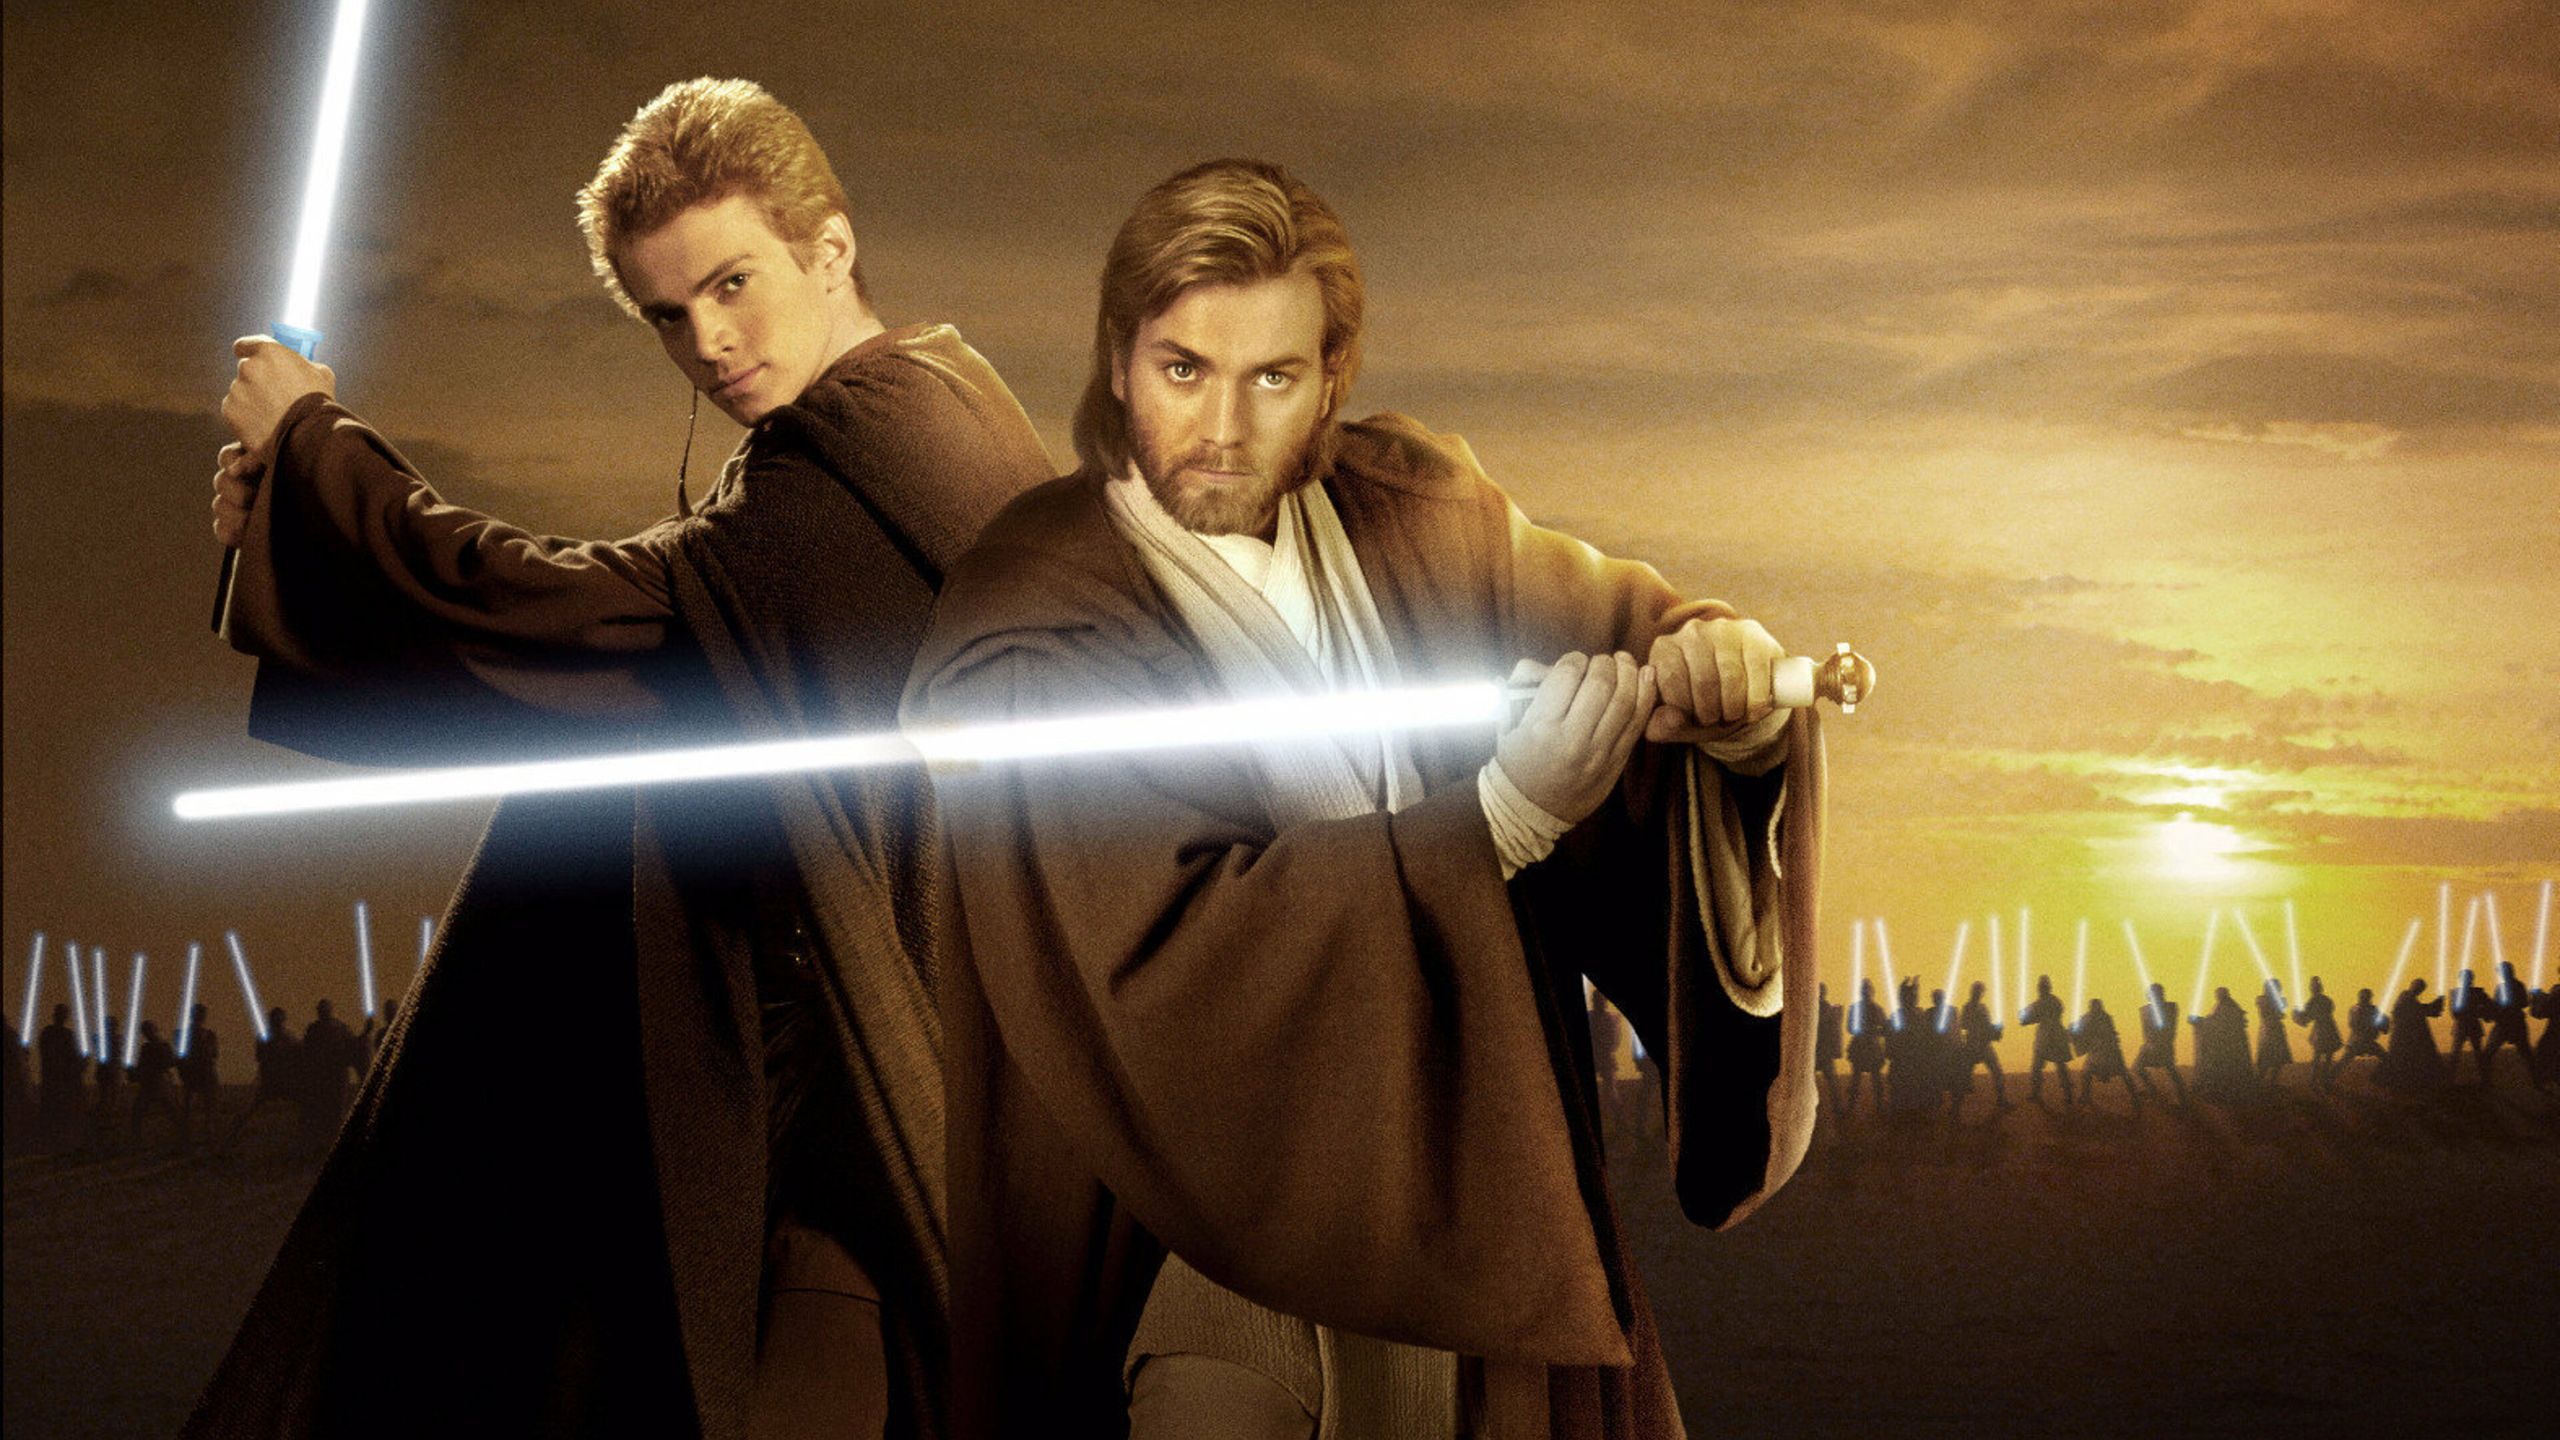 Star Wars: Episode 2 - Attack of The Clones - obi-wan kenobi and Anakin